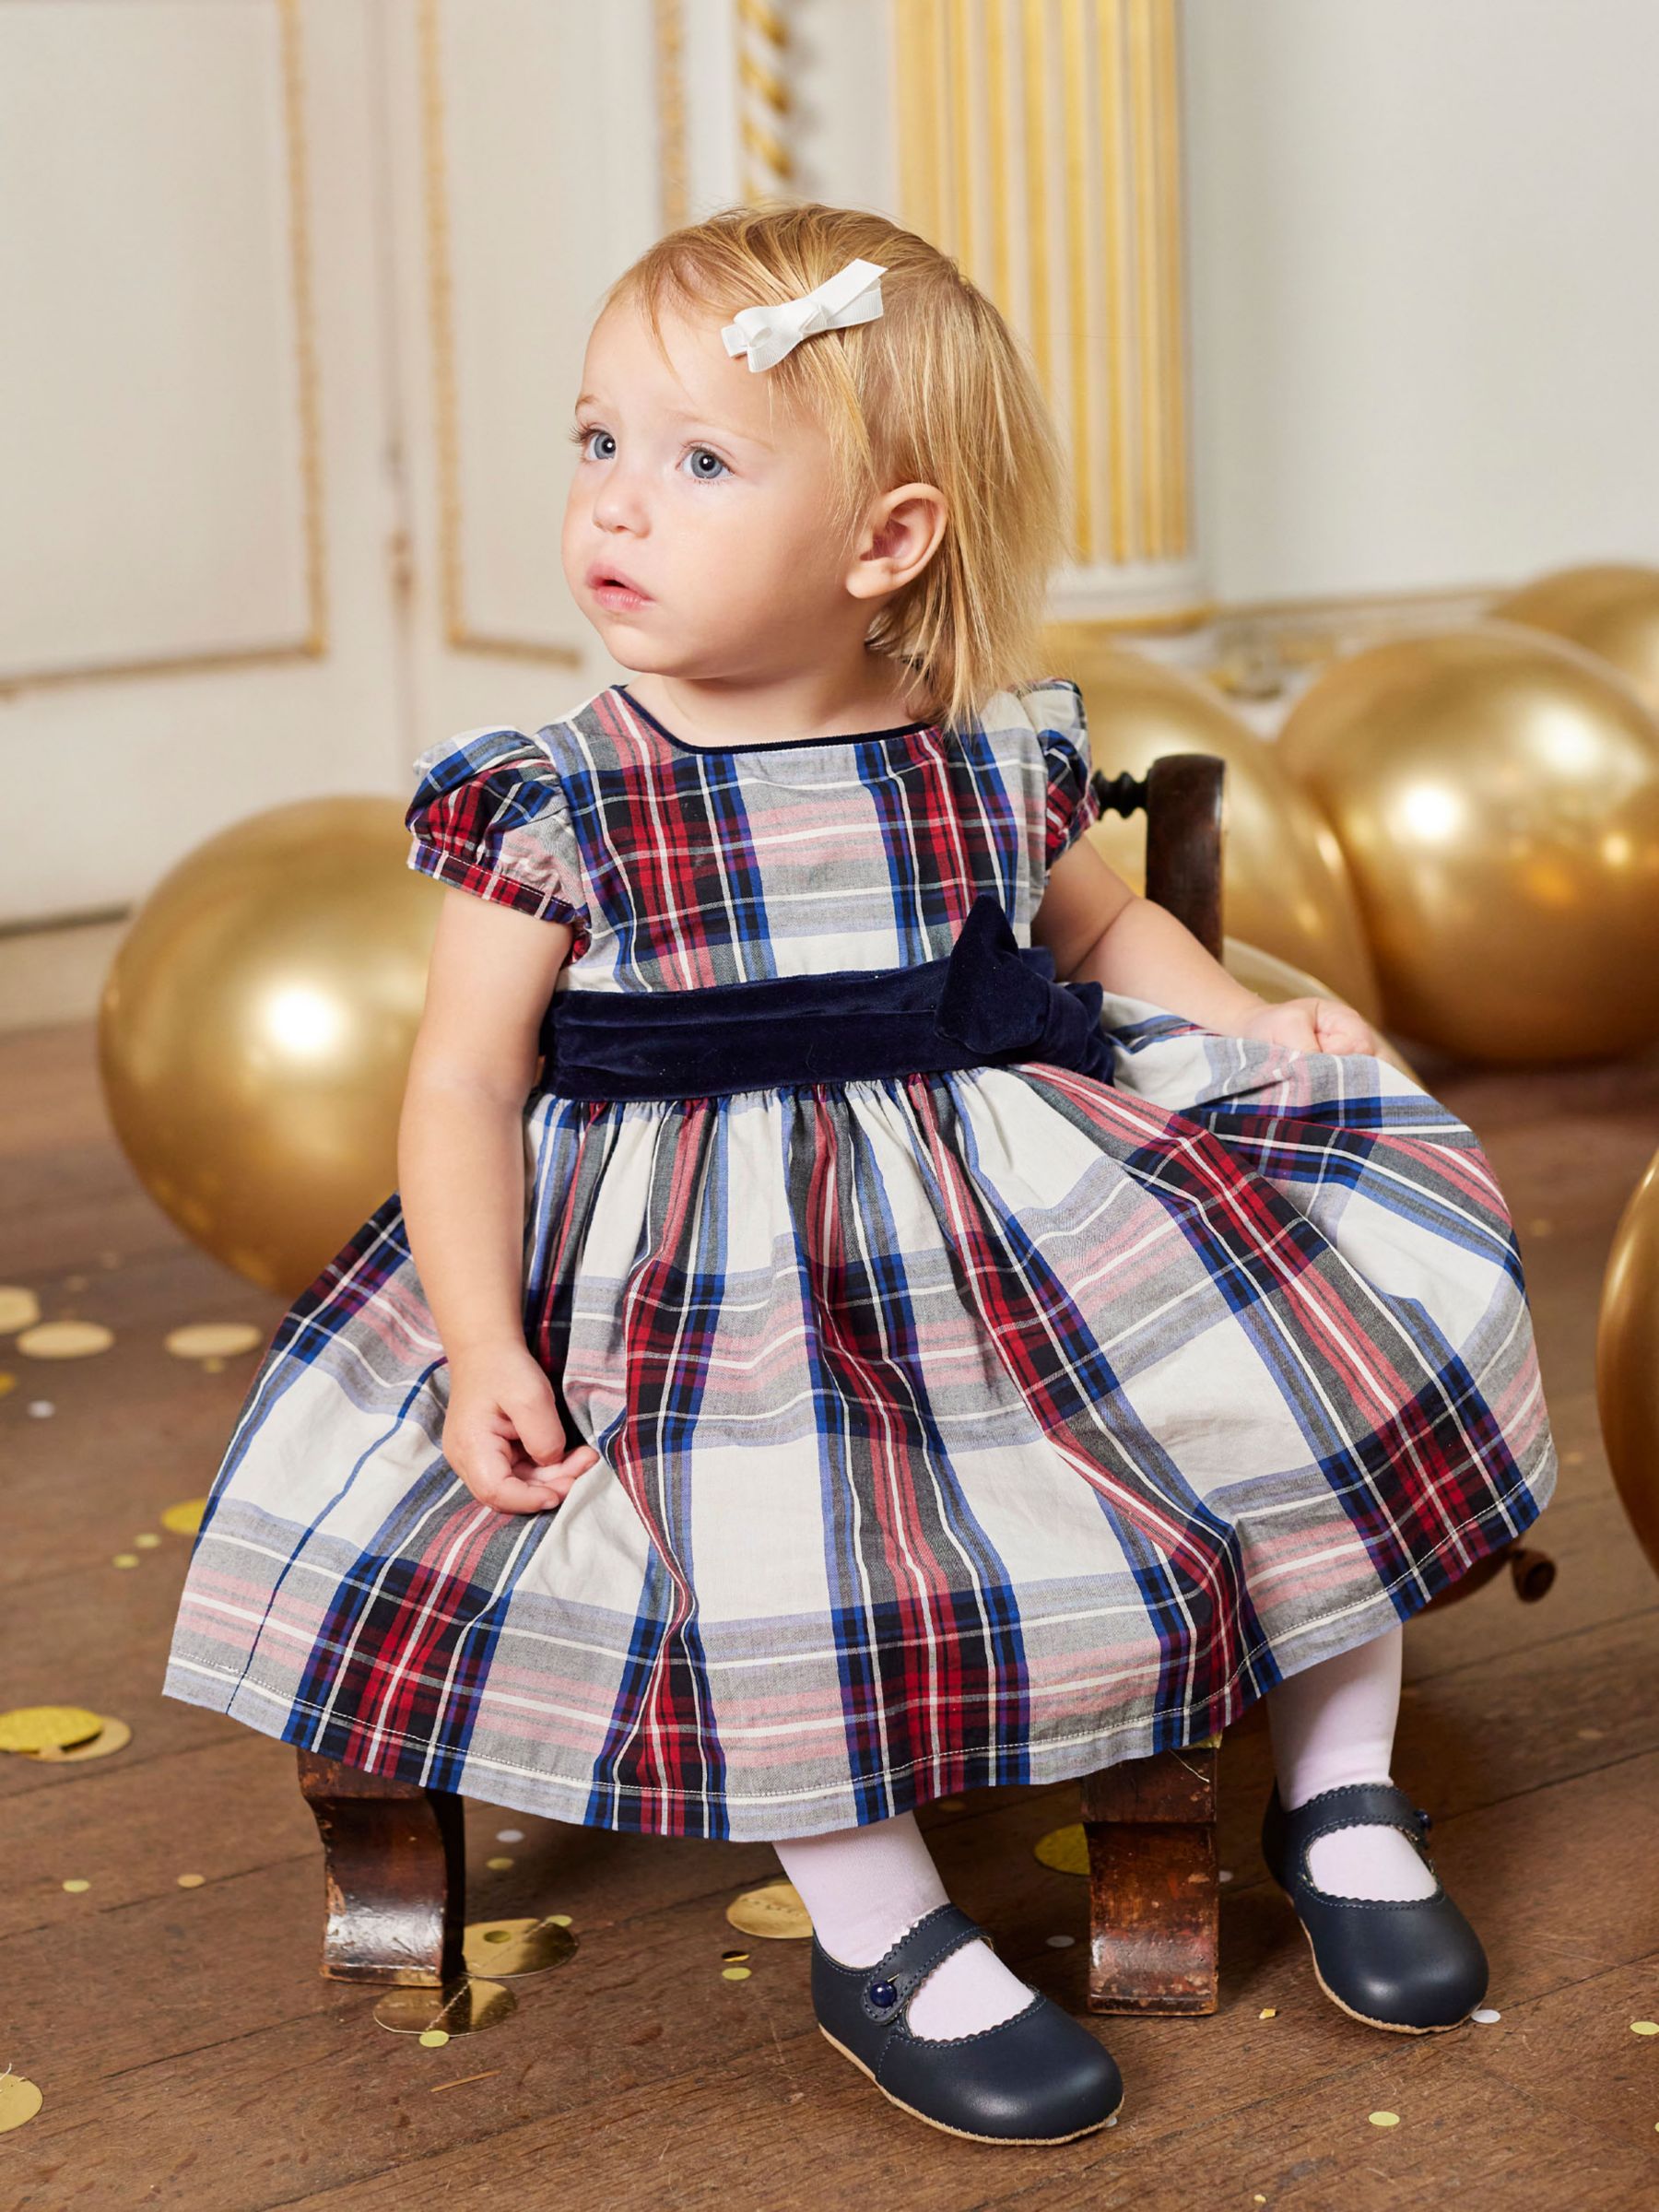 Buy Trotters Baby Victoria Stewart Tartan Velvet Belt Party Dress, Multi Online at johnlewis.com